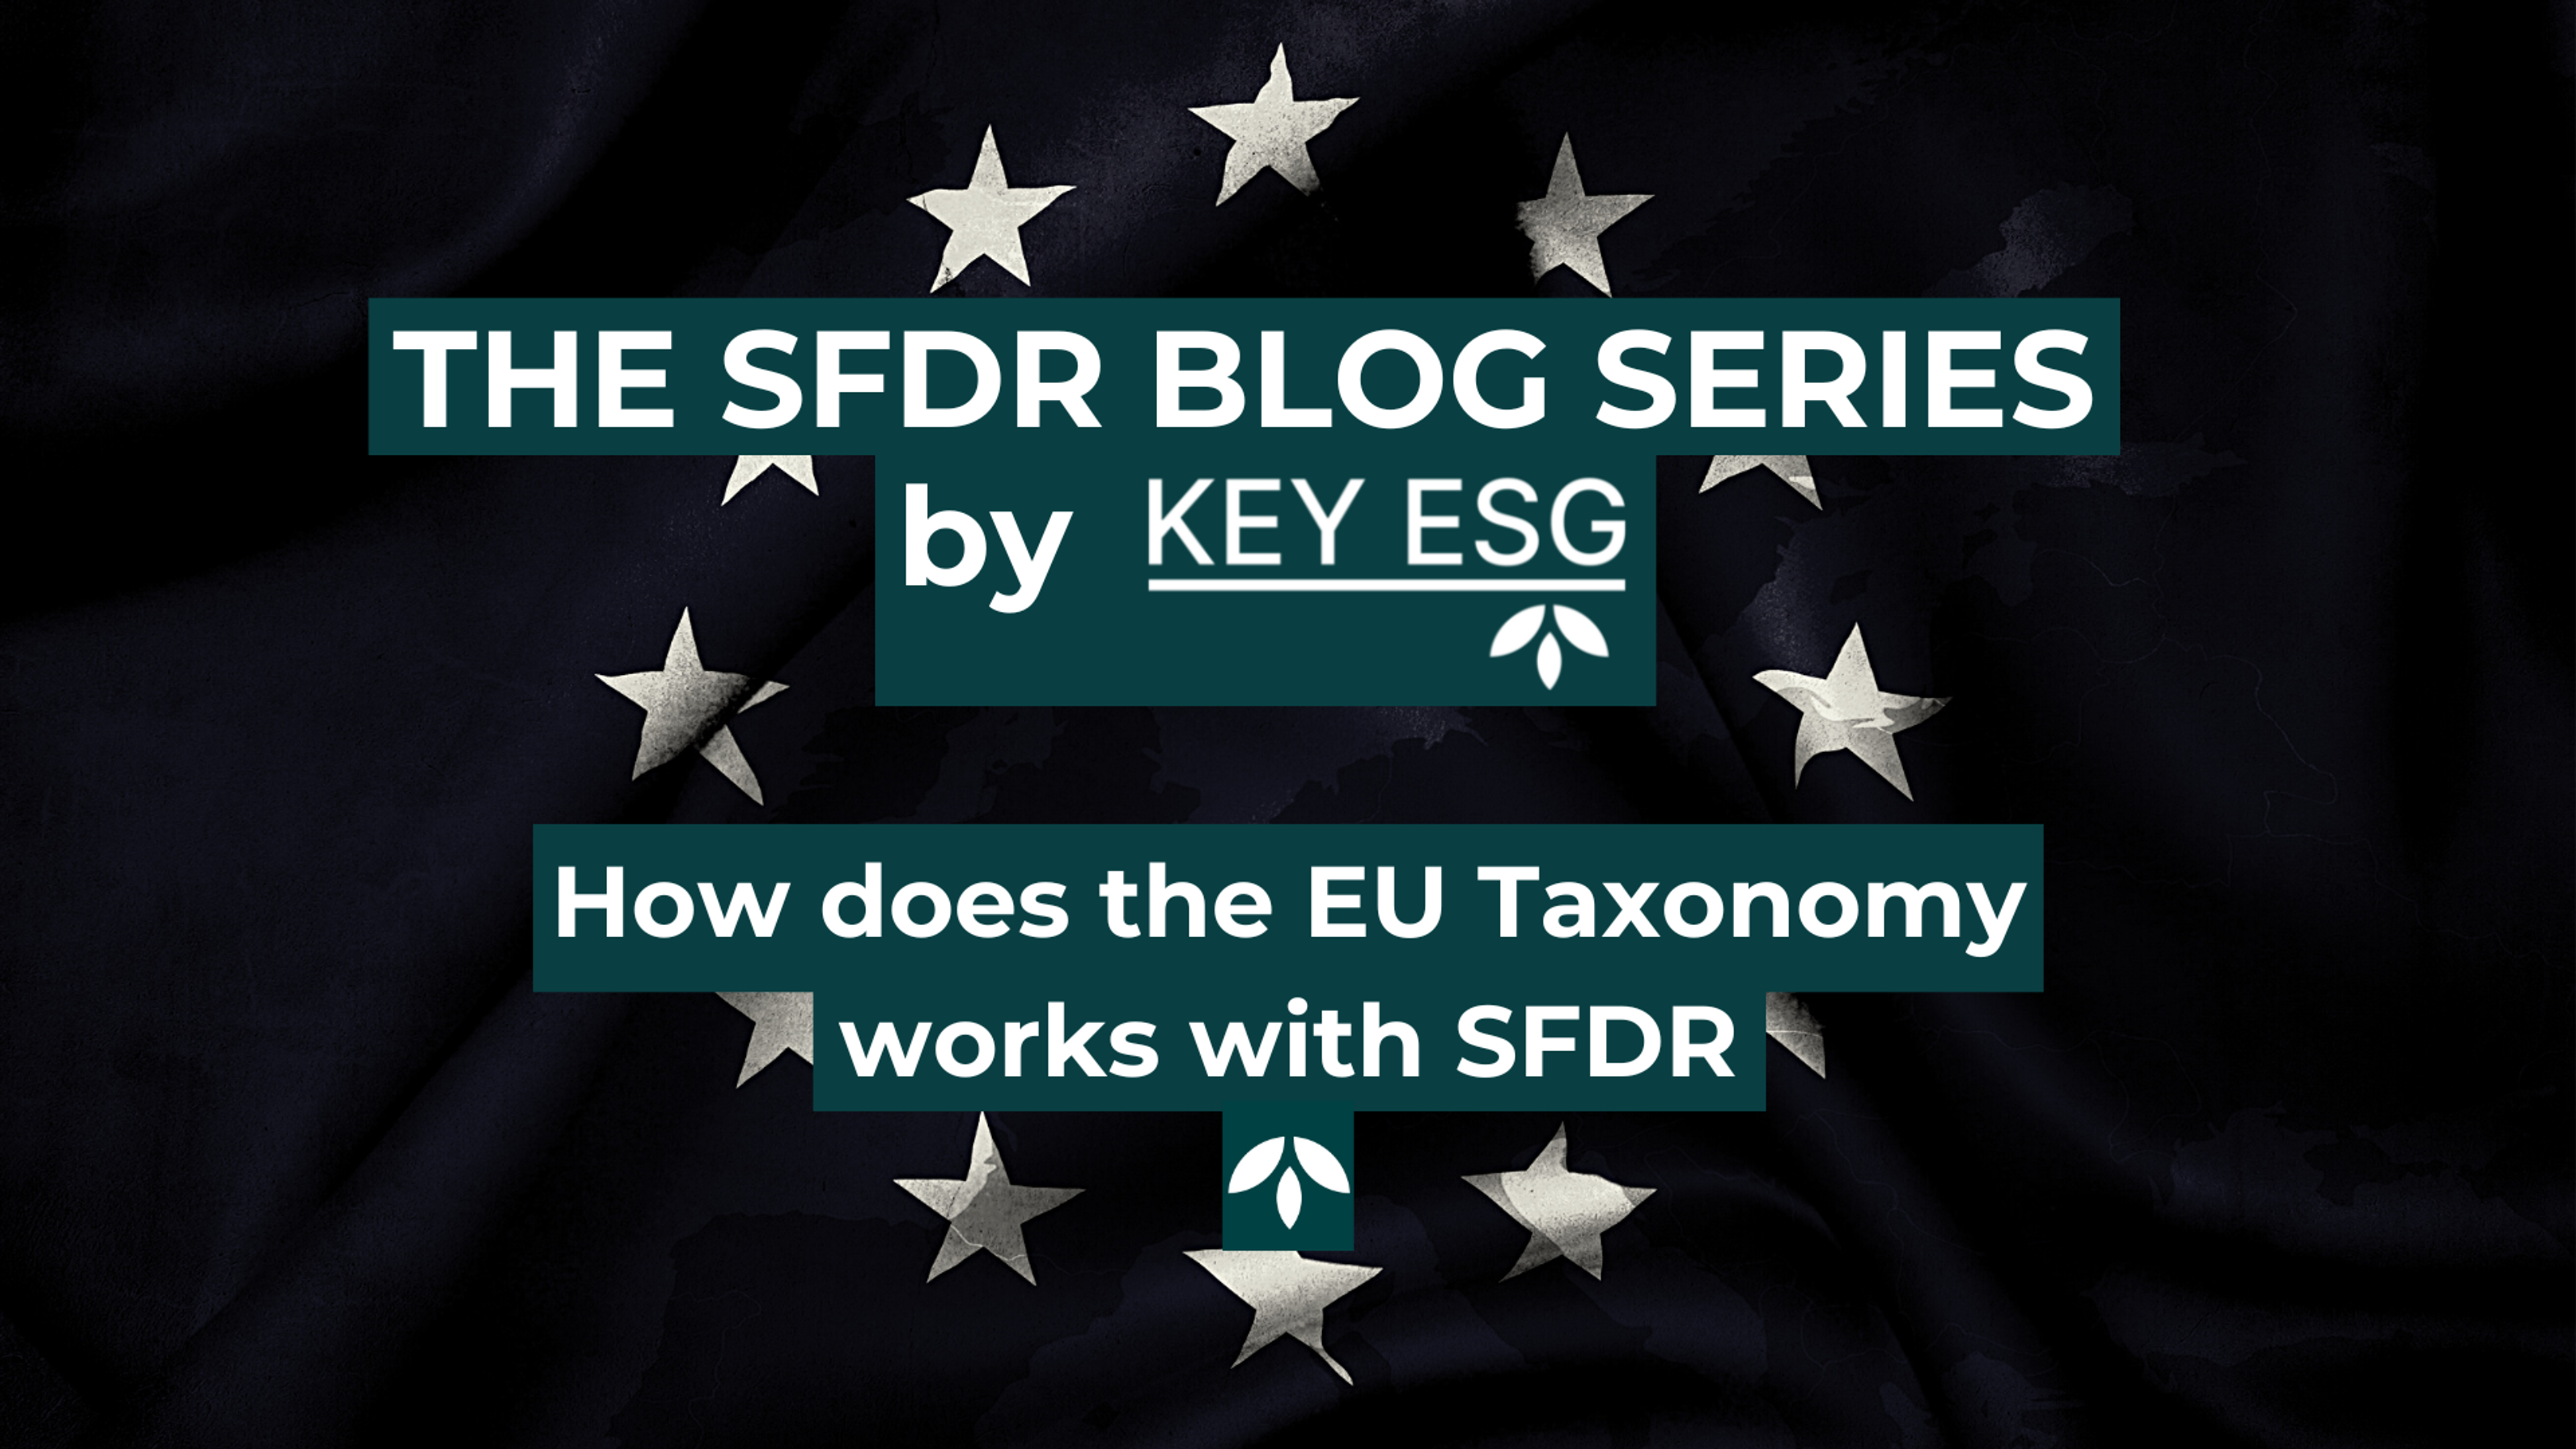 KEY ESG experts explain how the EU taxonomy work with SFDR